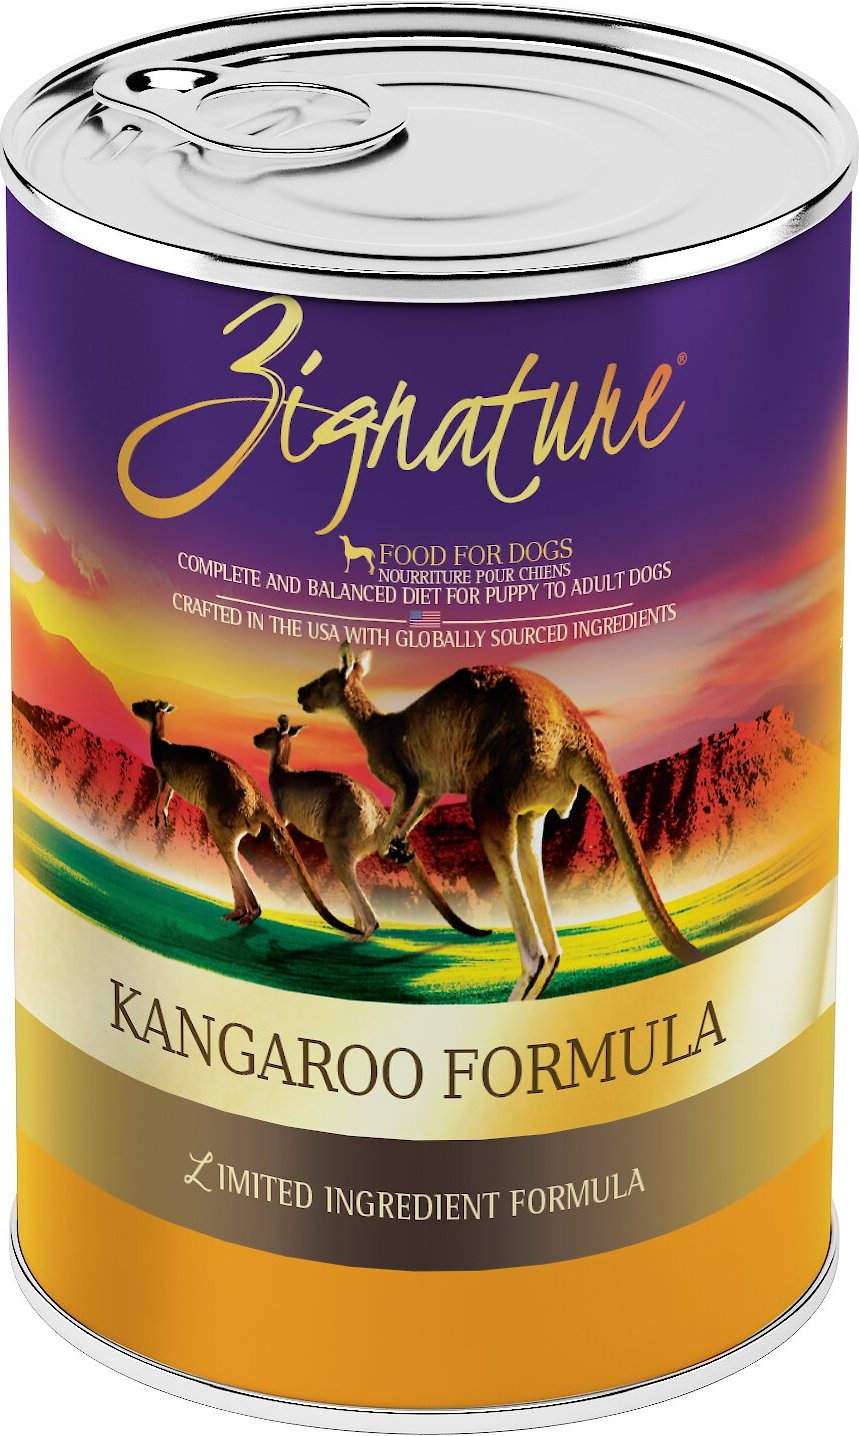 kangaroo dog food